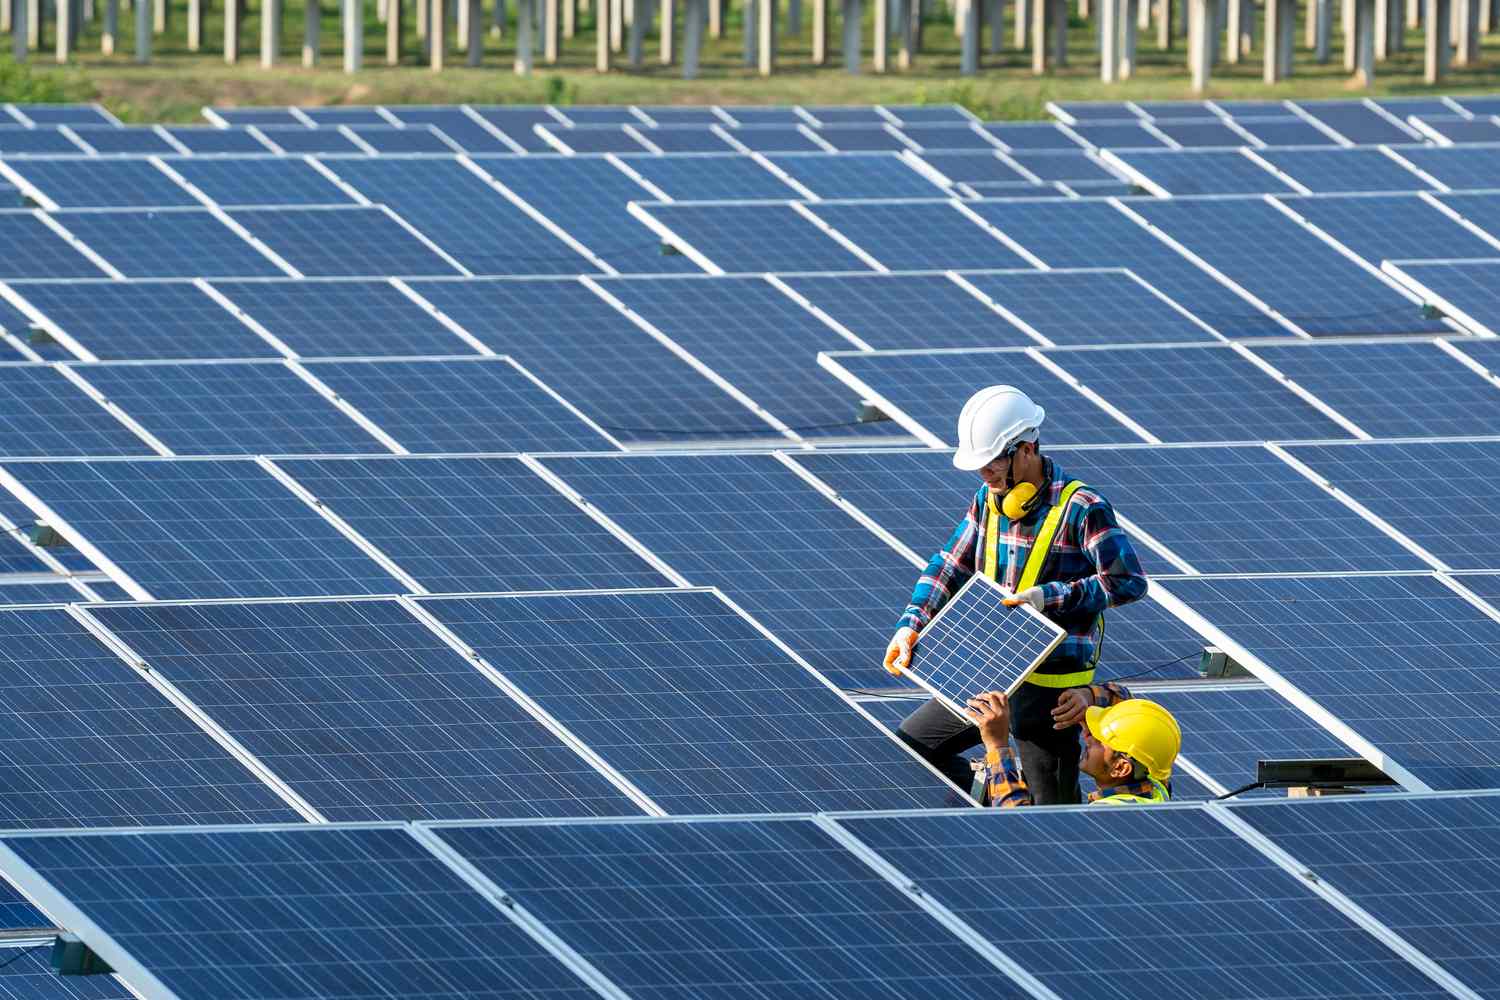 solar installation companies in chennai, Best Solar Companies in Chennai,No:1 Solar Companies in chennai